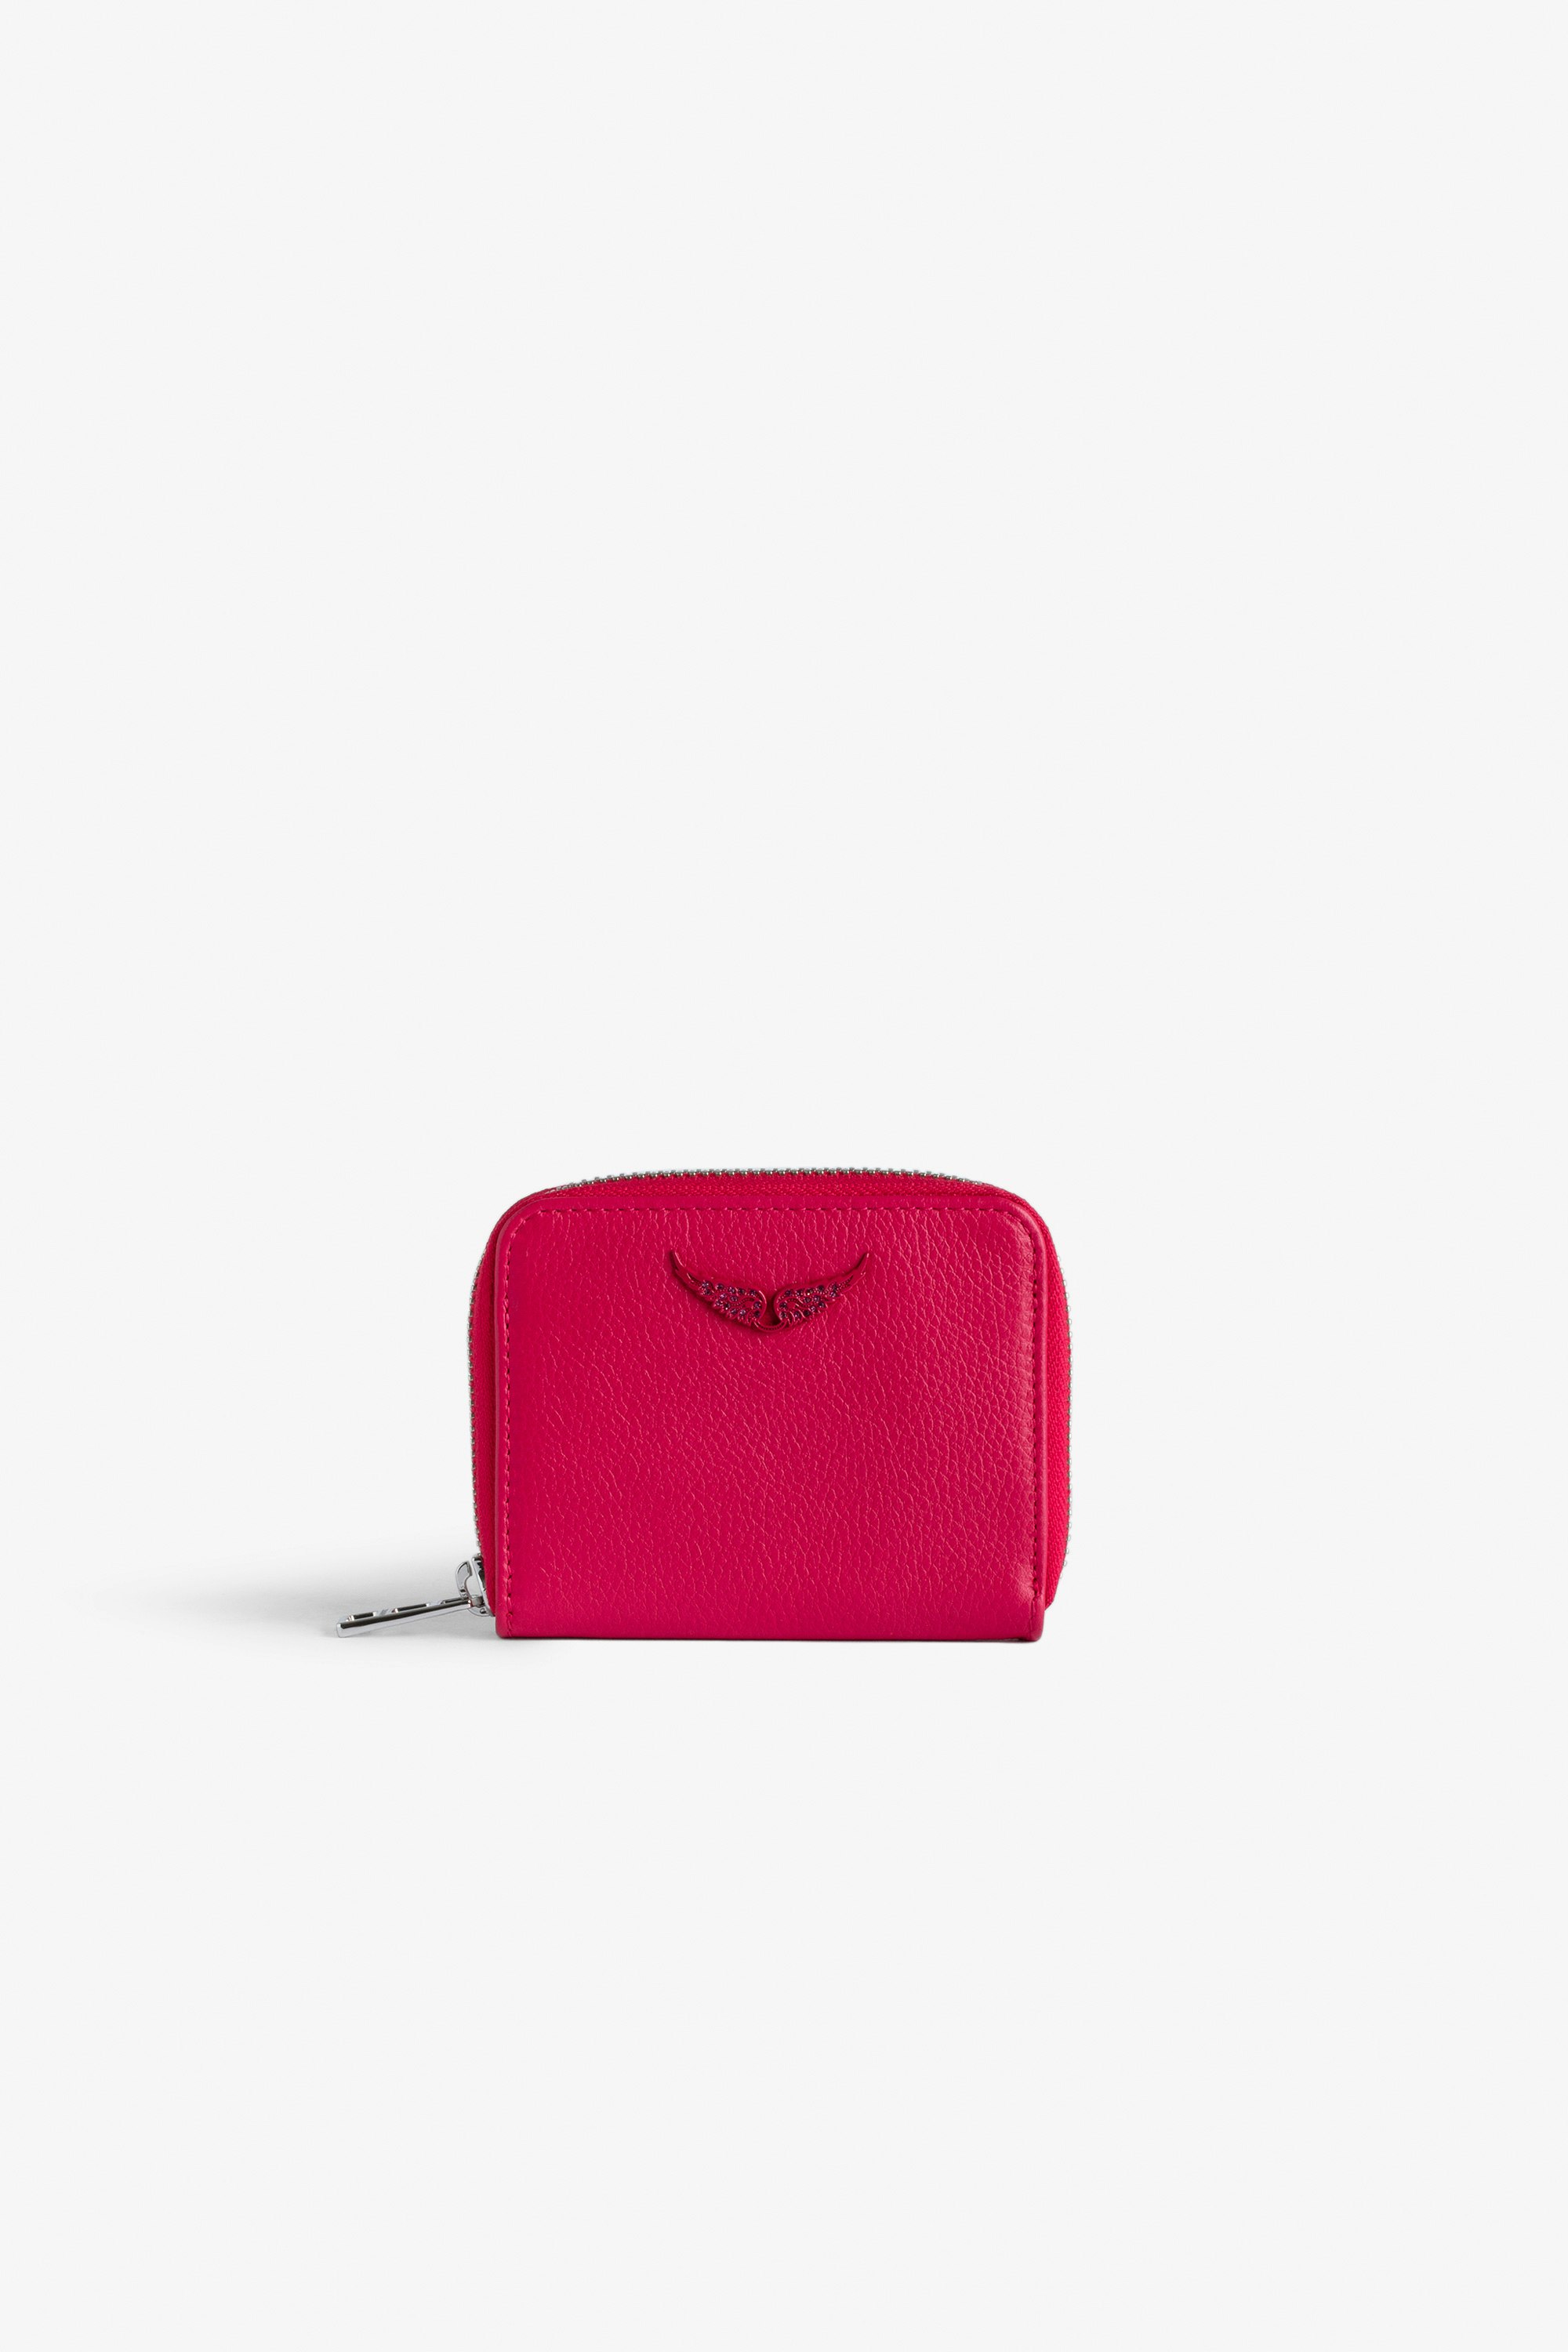 Monedero Mini ZV - Cartera rosa de piel granulada con colgante de alas con strass para mujer.